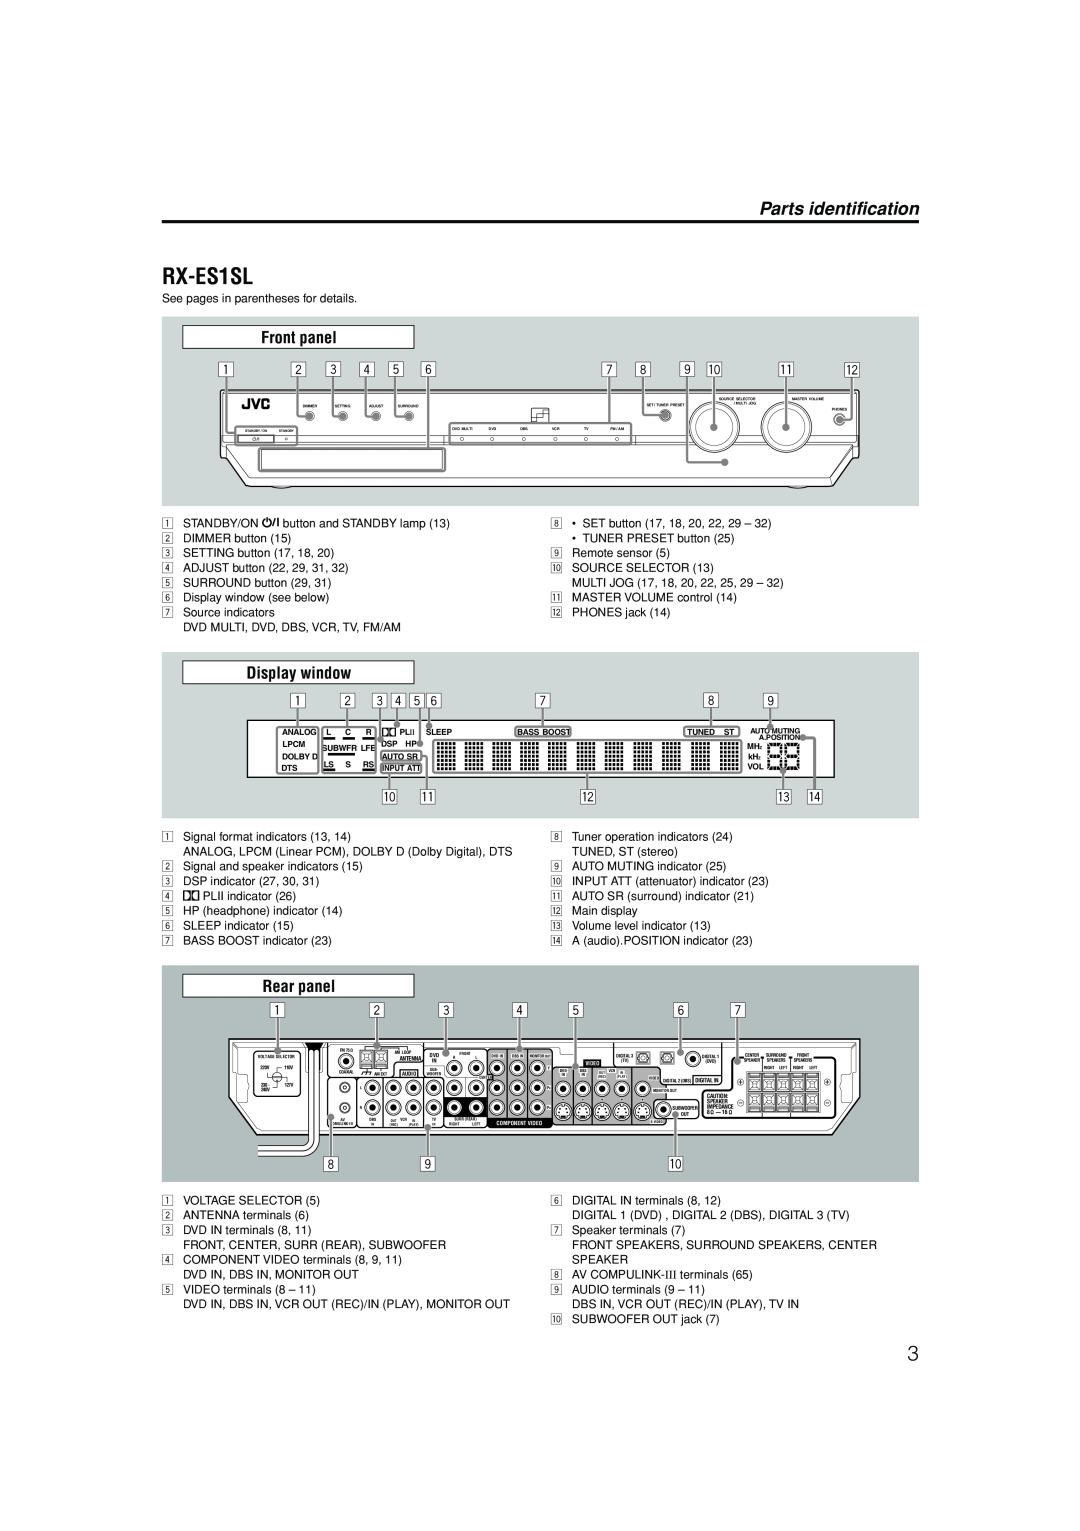 JVC LVT1002-012B manual RX-ES1SL, Parts identification, Front panel 